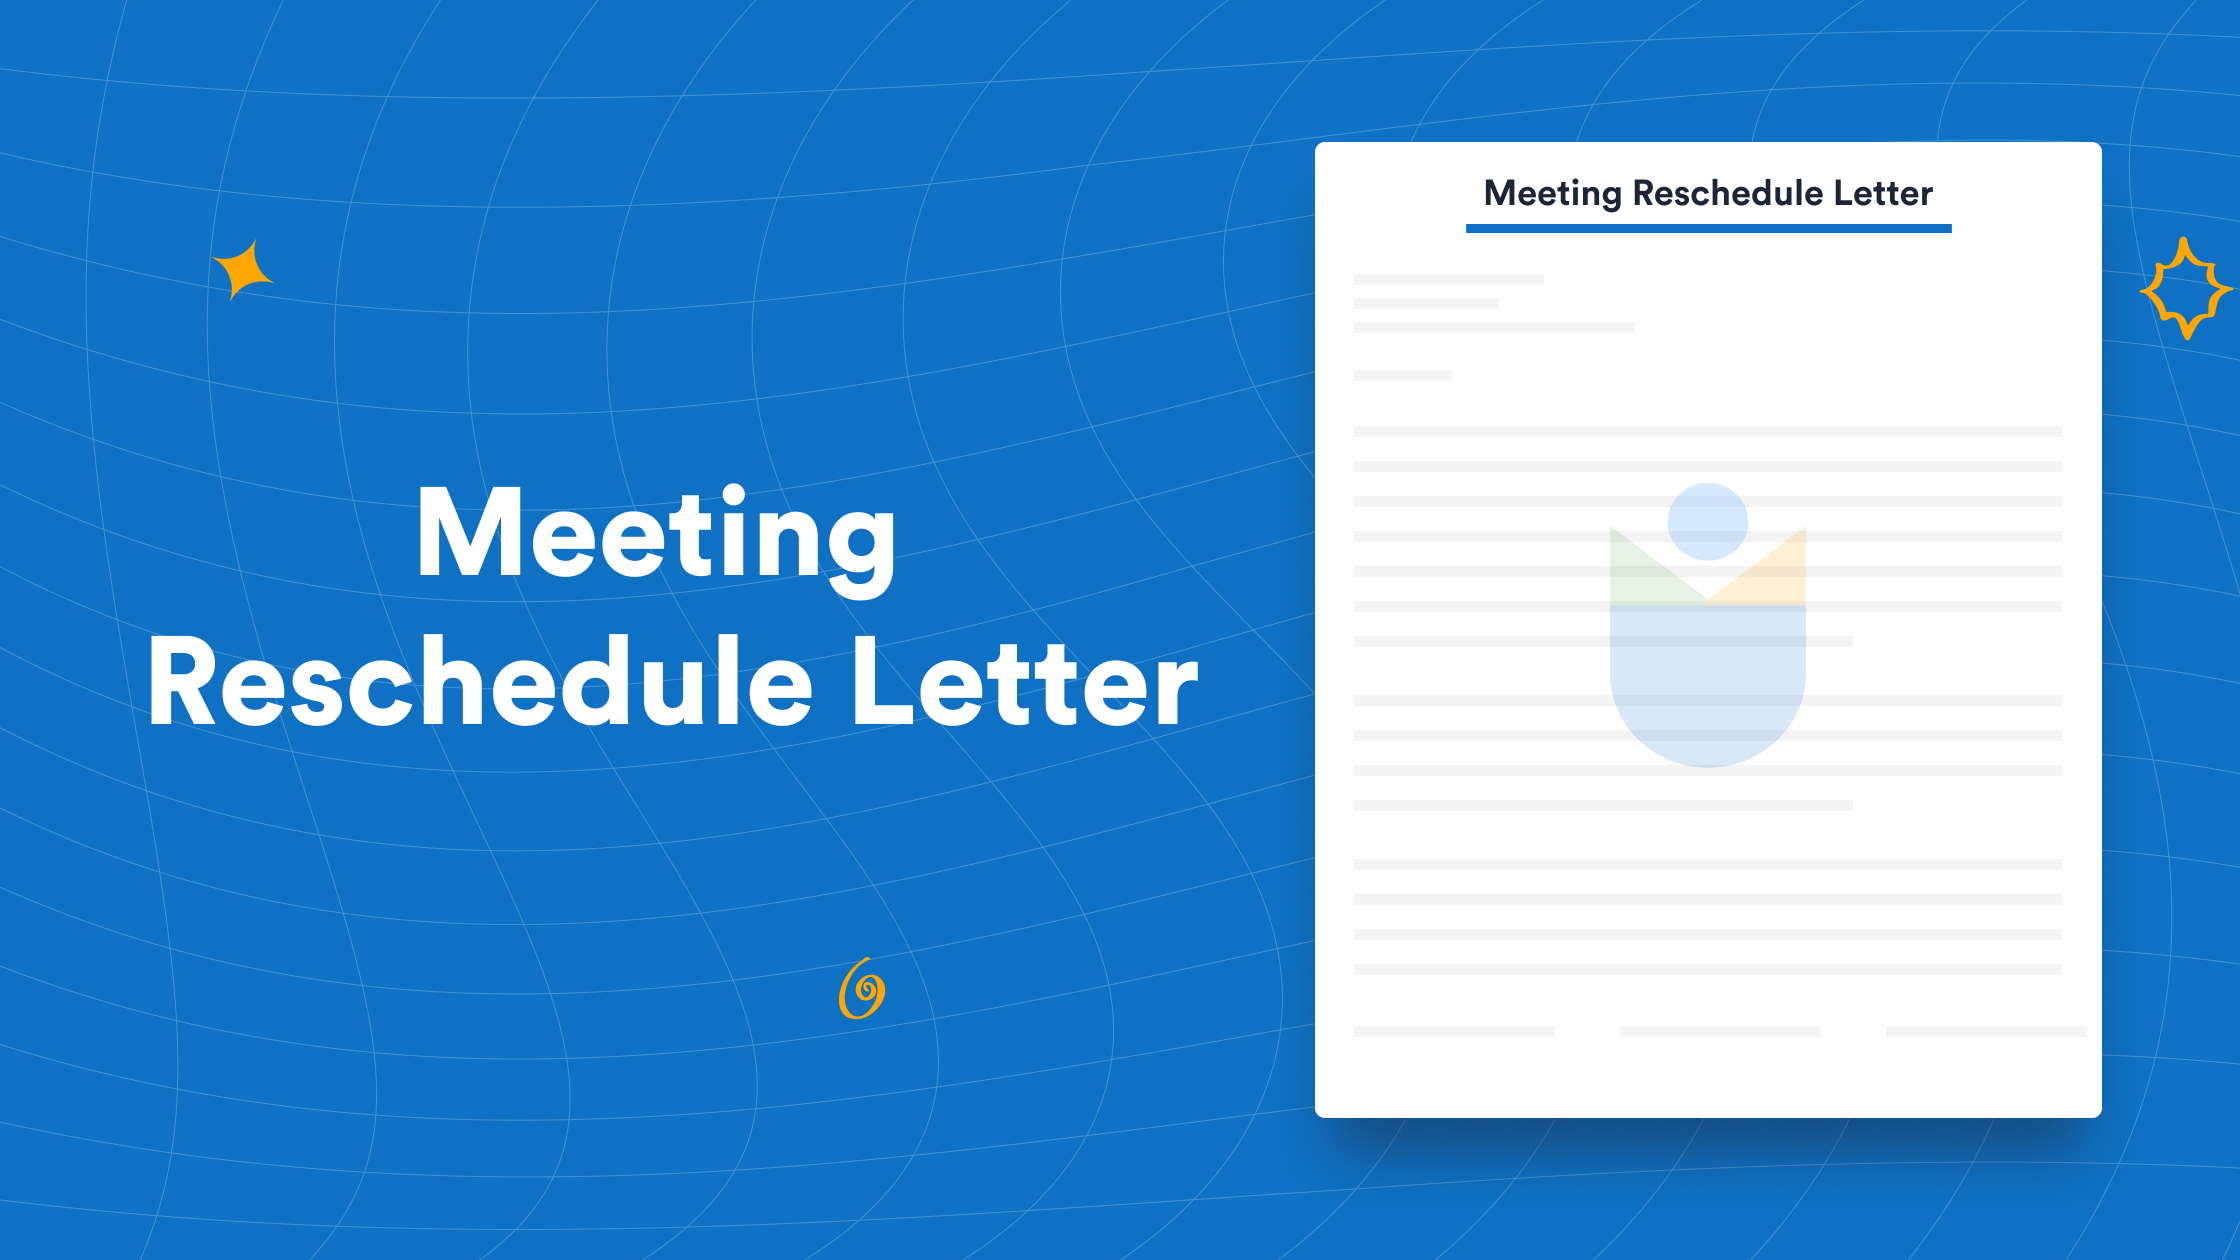 Meeting Reschedule Letter